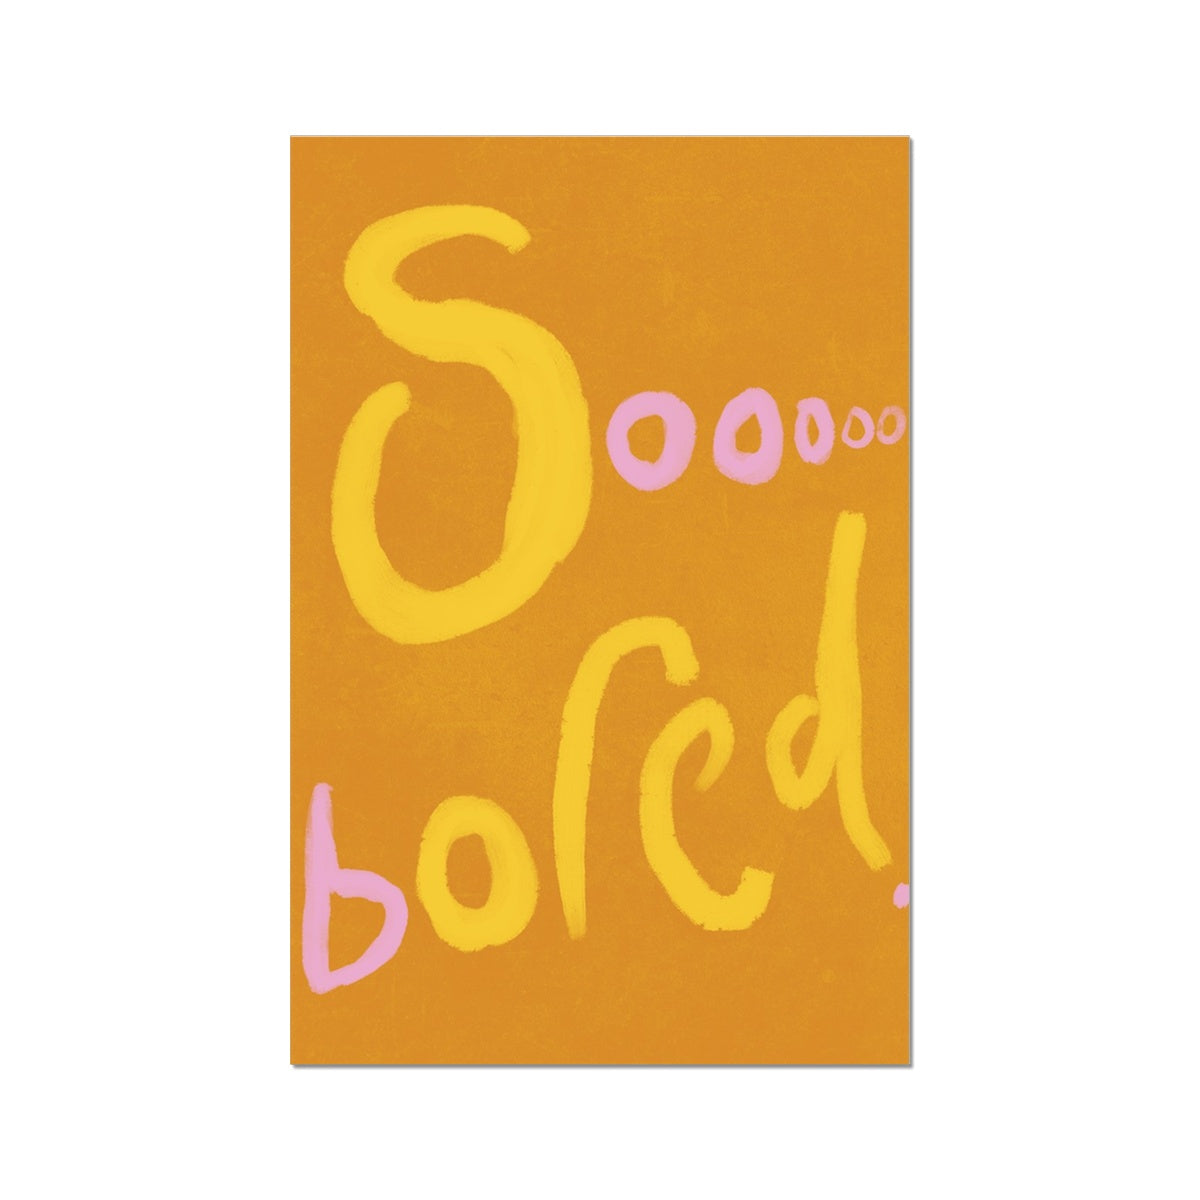 Sooooo Bored Print - Brown, Yellow, Pink Fine Art Print